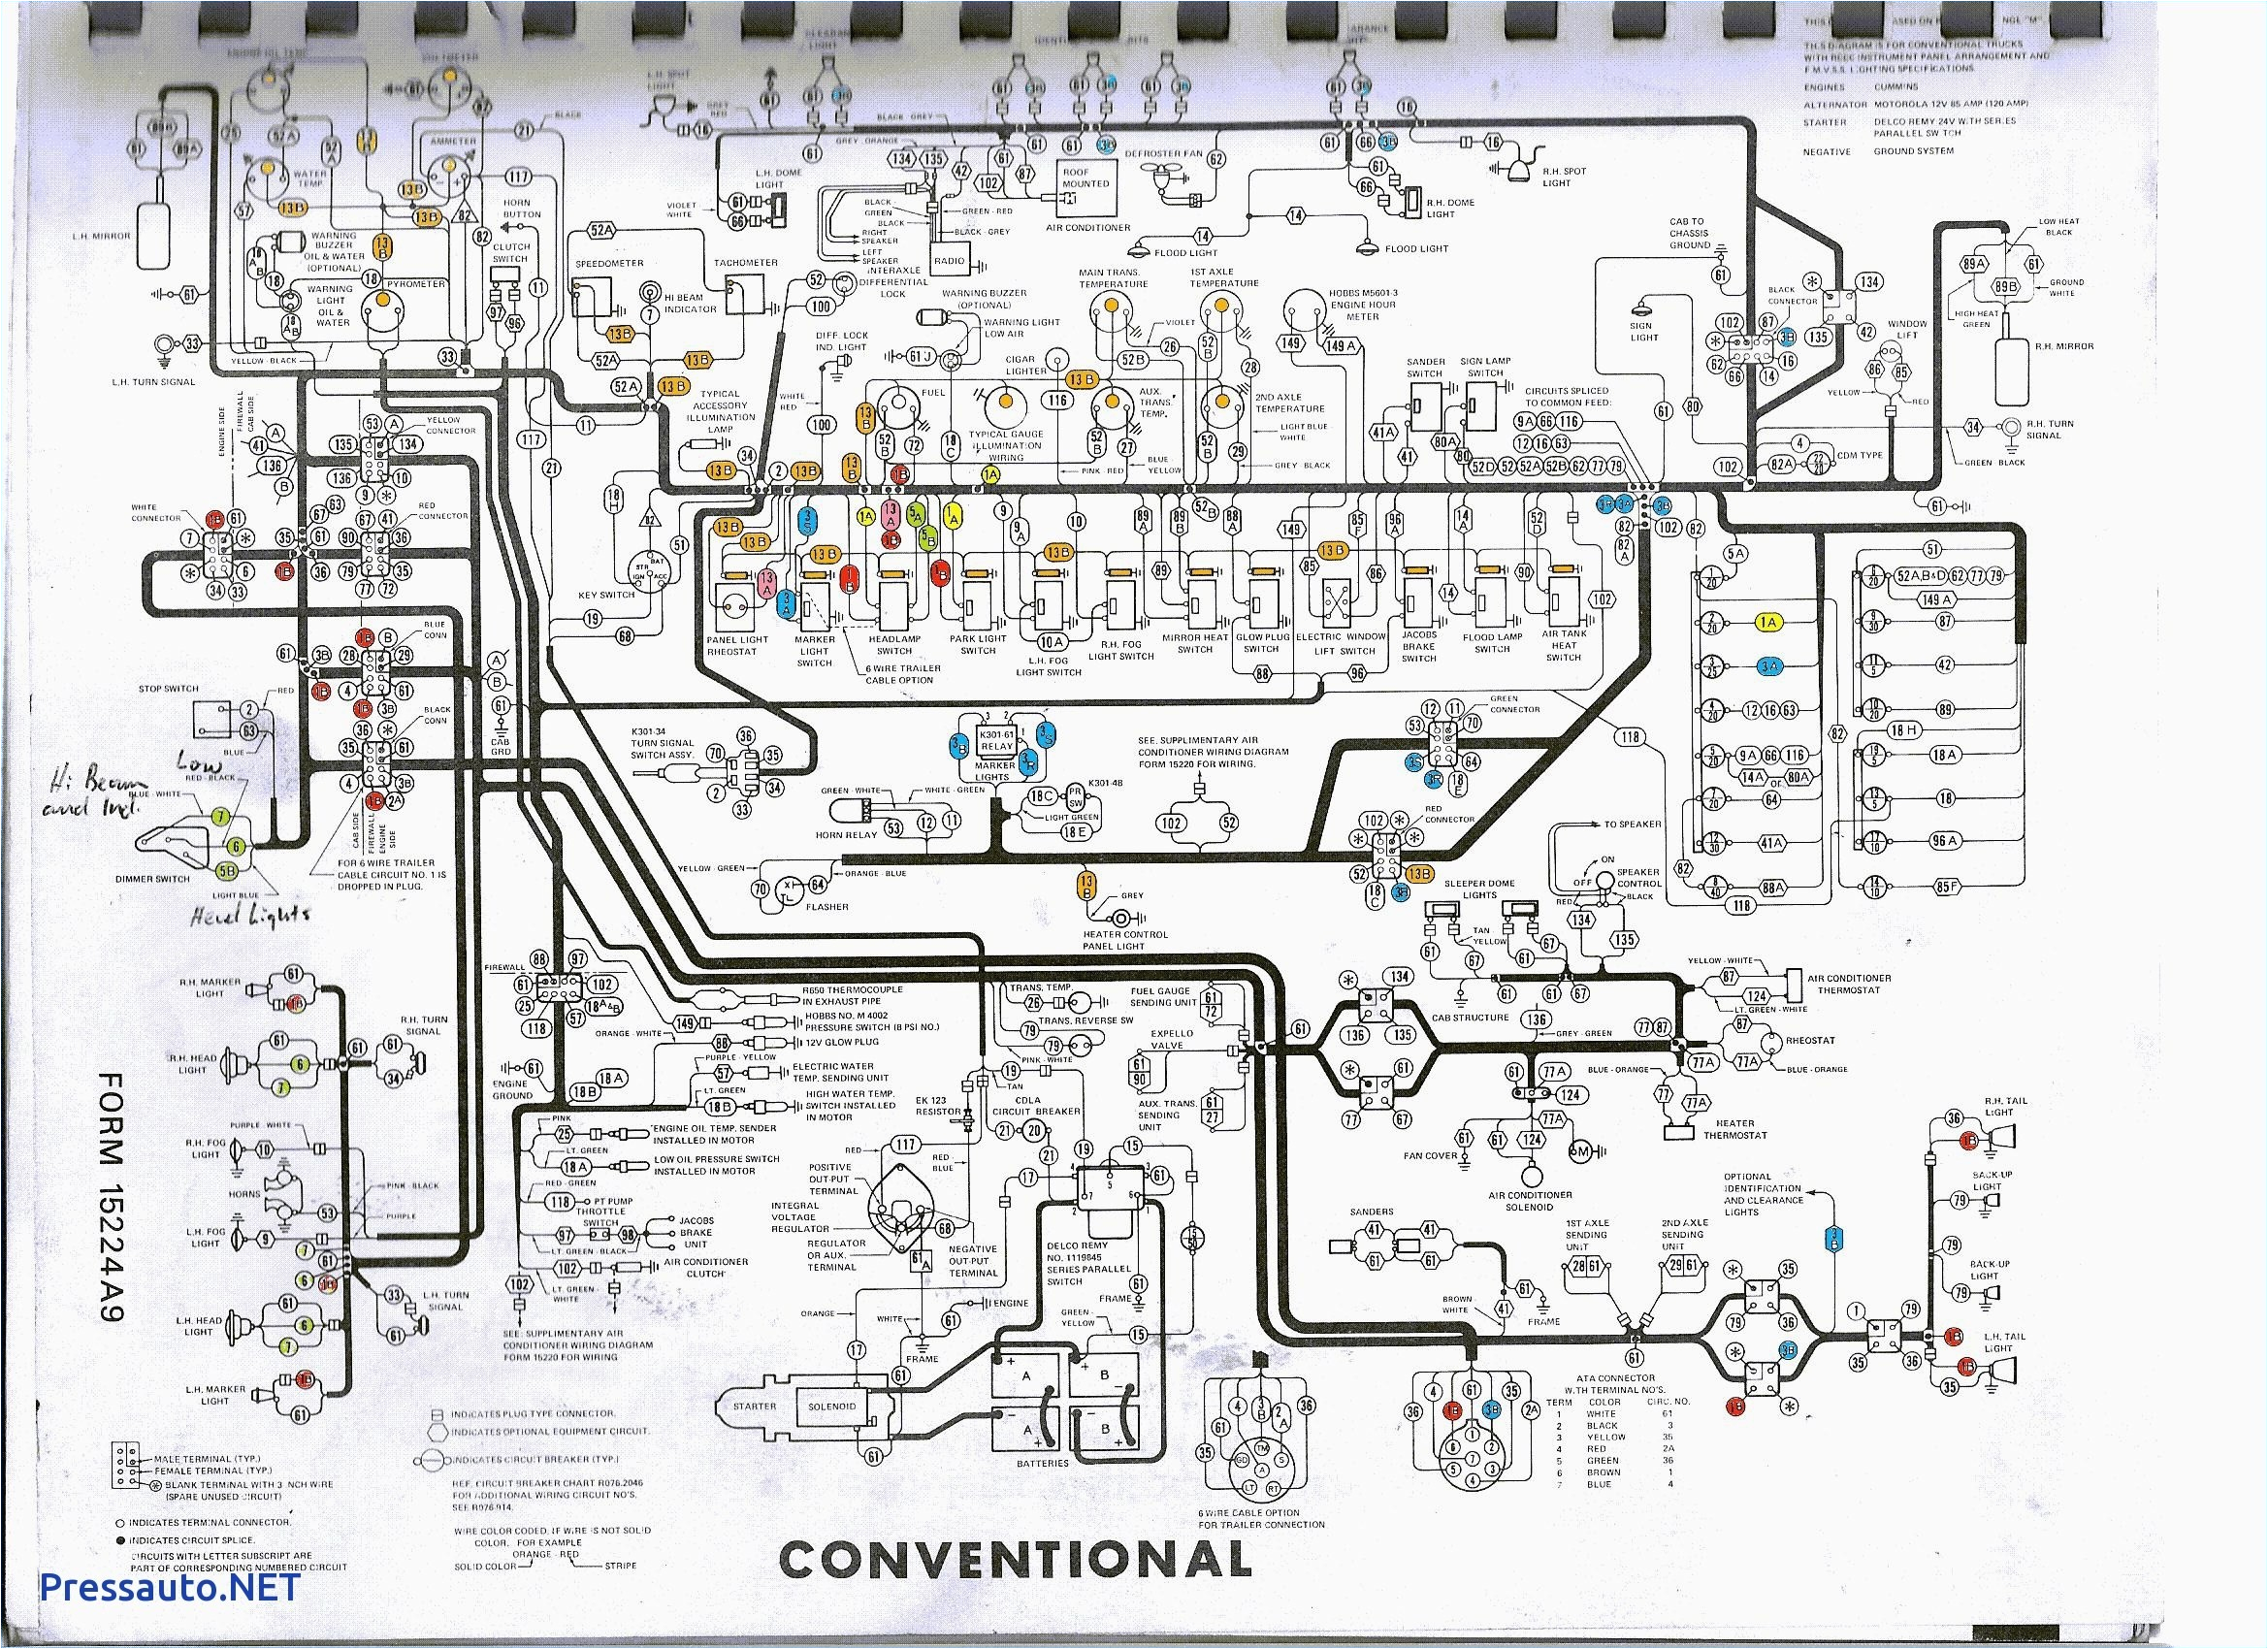 mack truck wiring diagram free download pdf handbooks beauteous rh motherwill com mack truck wiring diagram